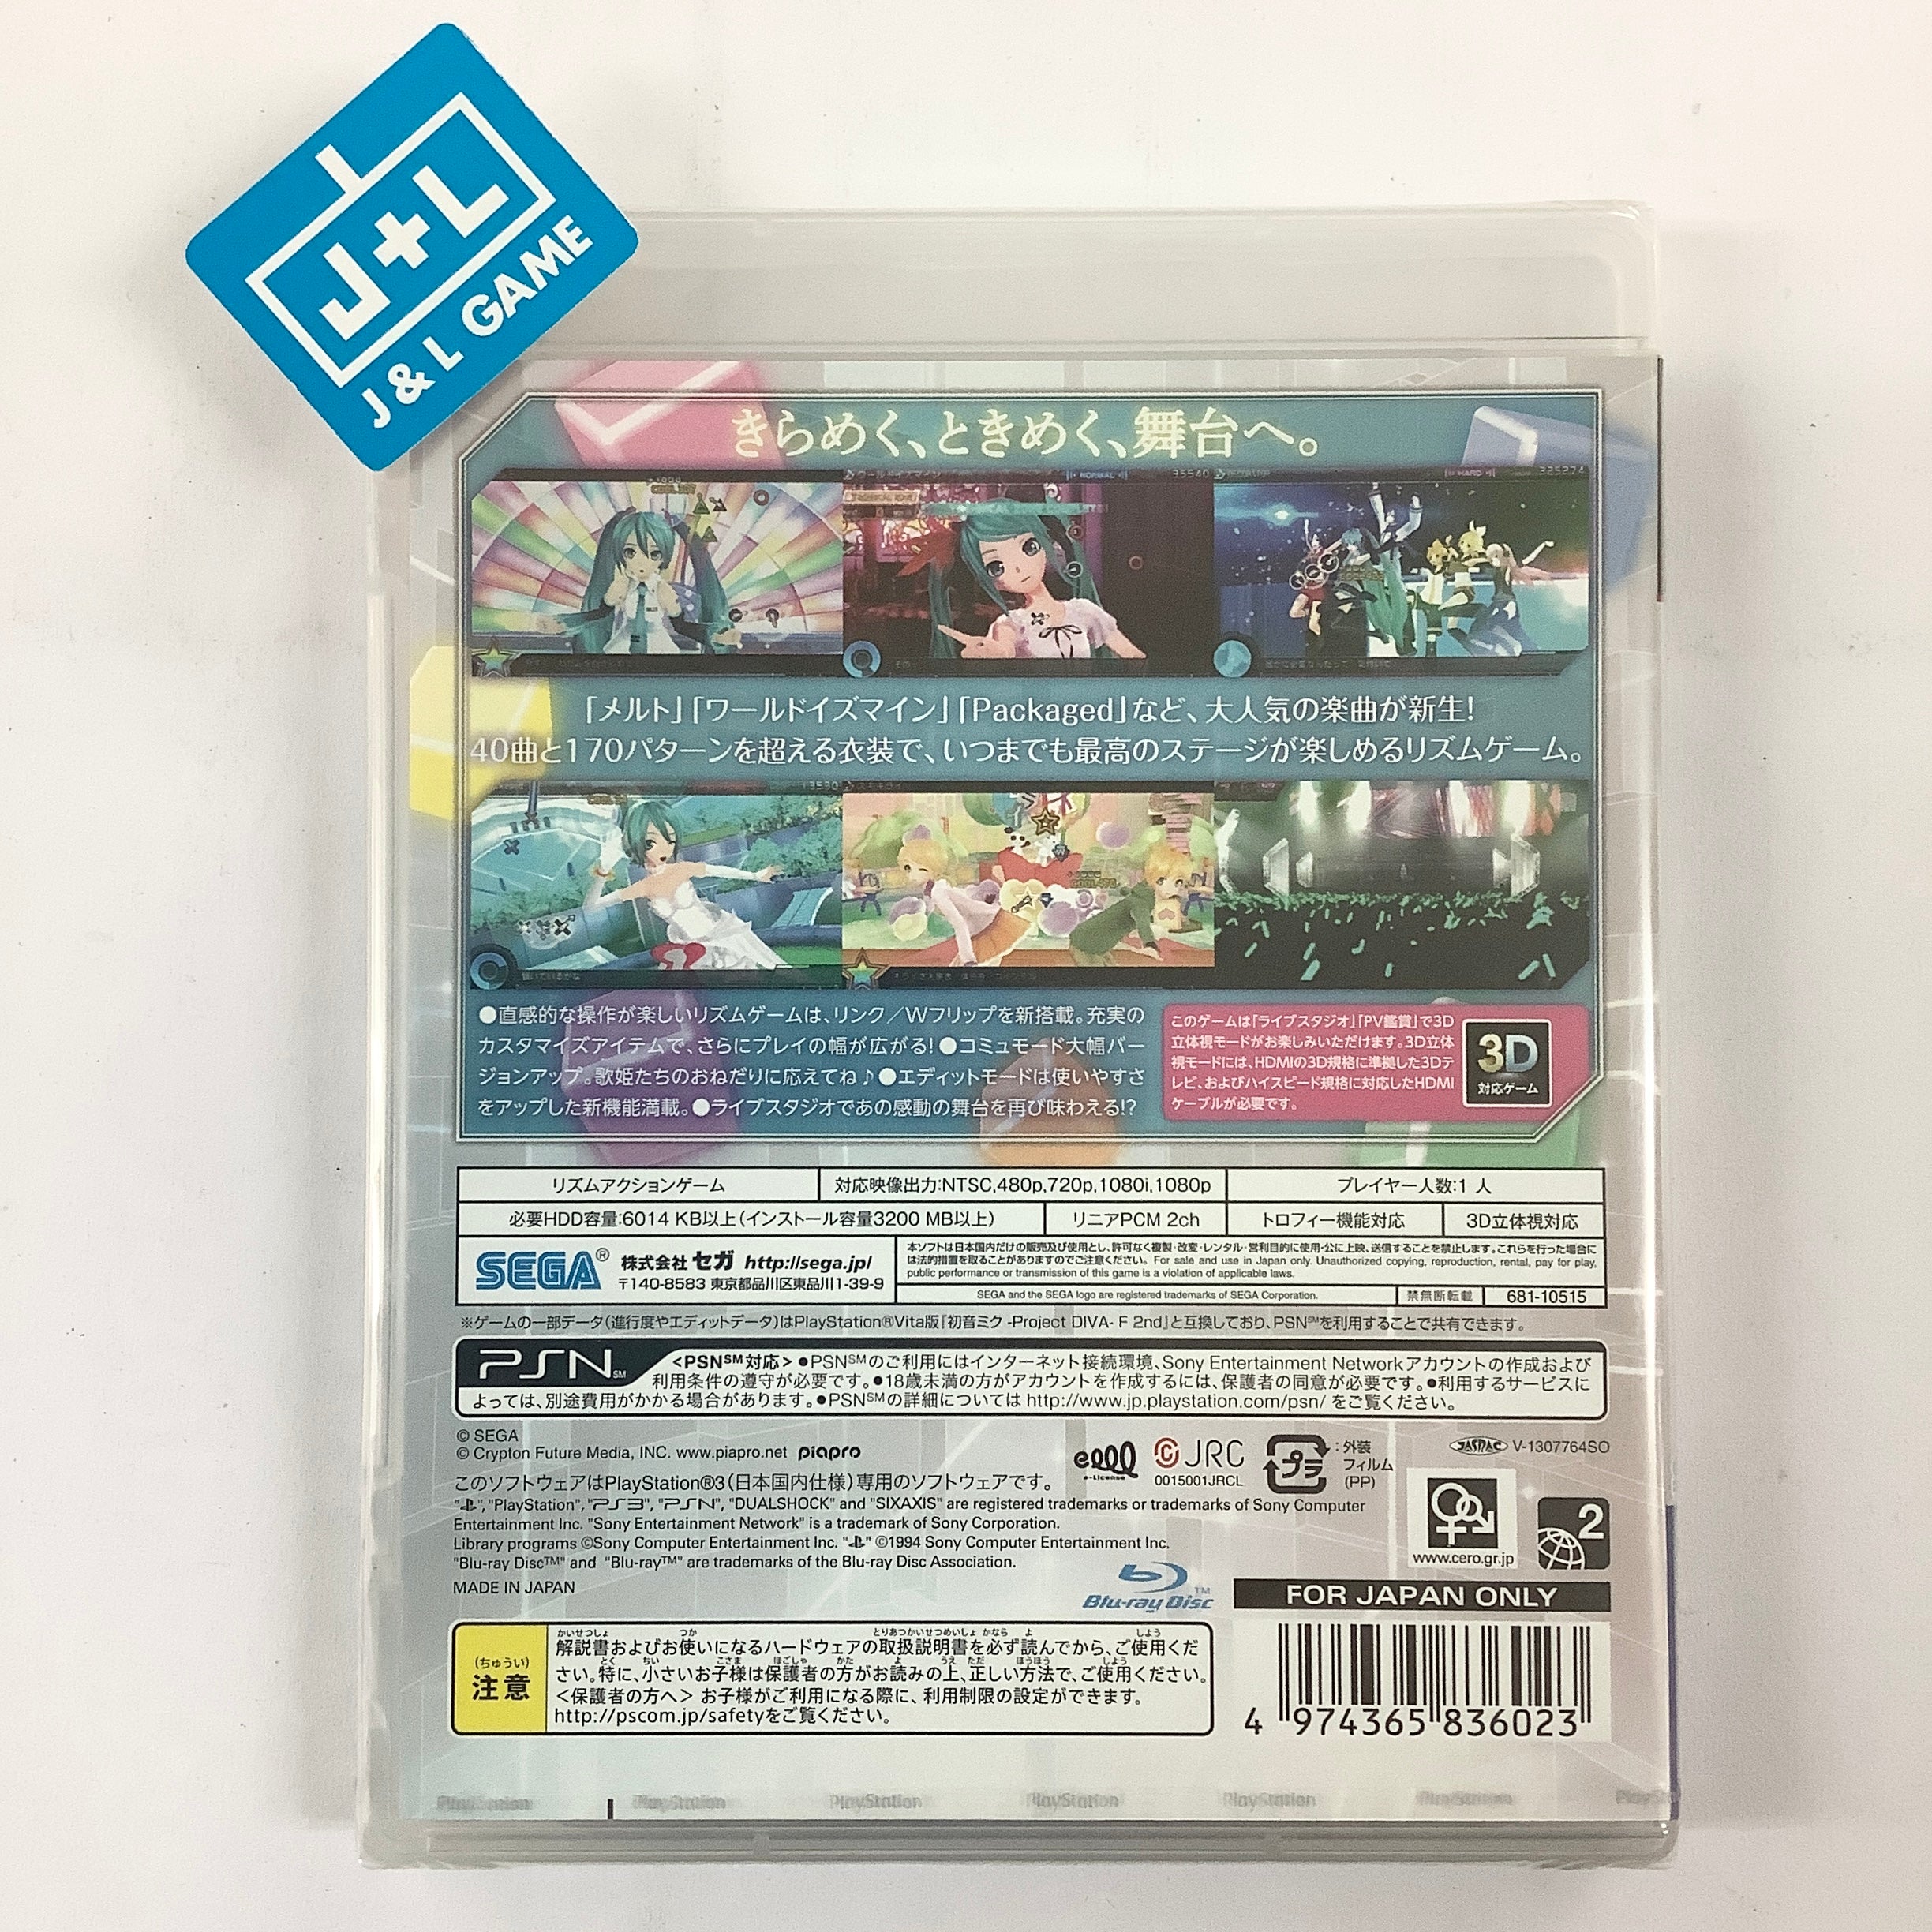 Hatsune Miku: Project Diva F 2nd - (PS3) PlayStation 3 (Japanese Import) Video Games Sega   